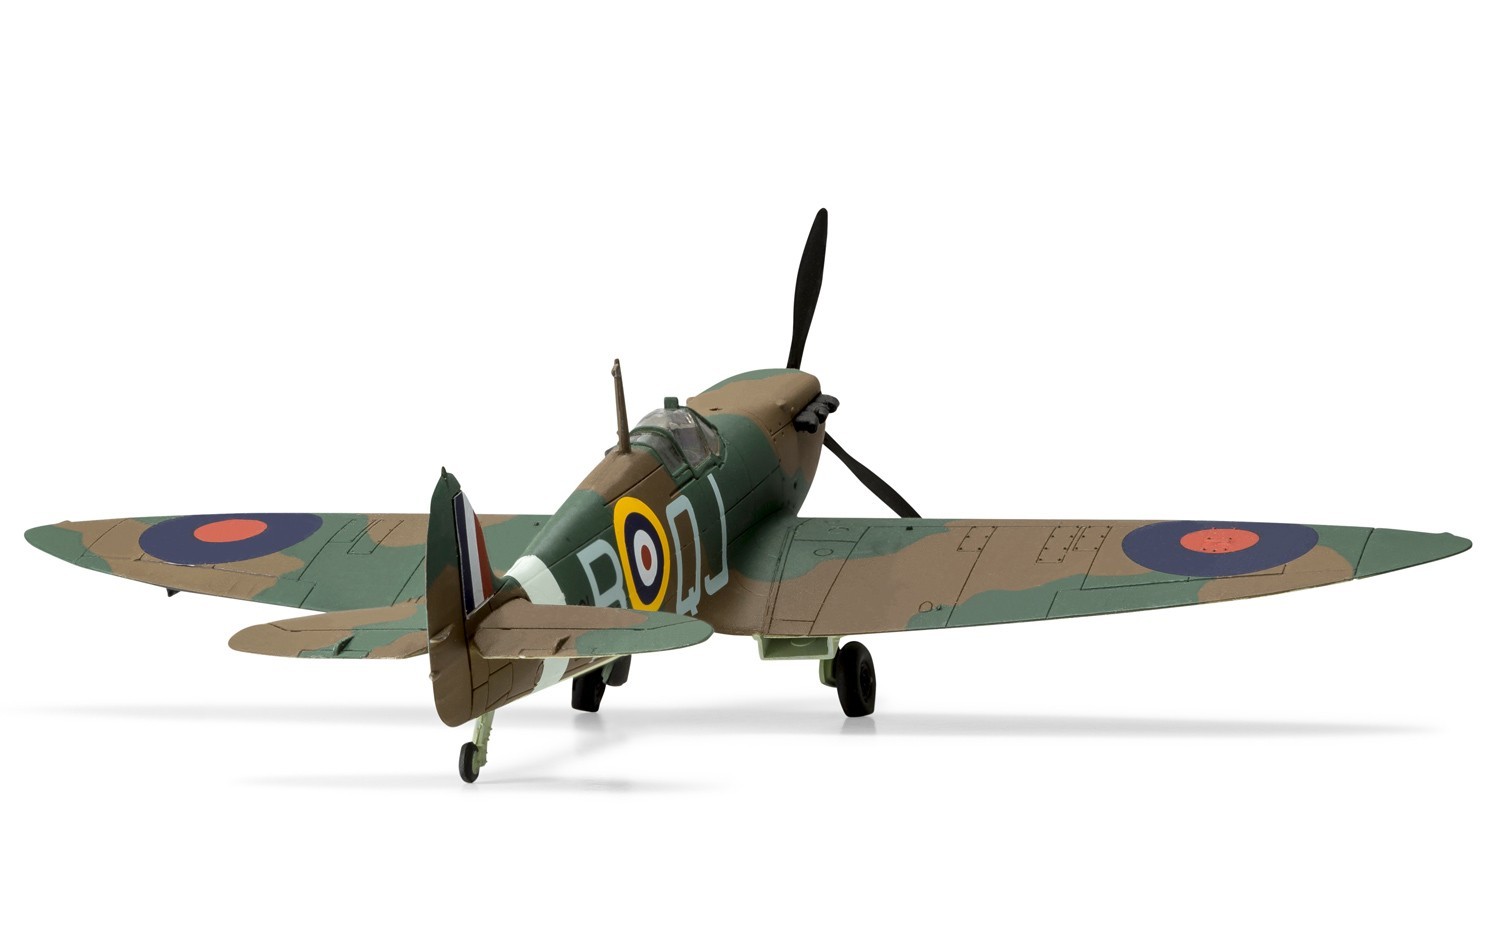 Airfix 1:72 Airplane Model Kit Supermarine Spitfire Mkla #A55100 Starter Set